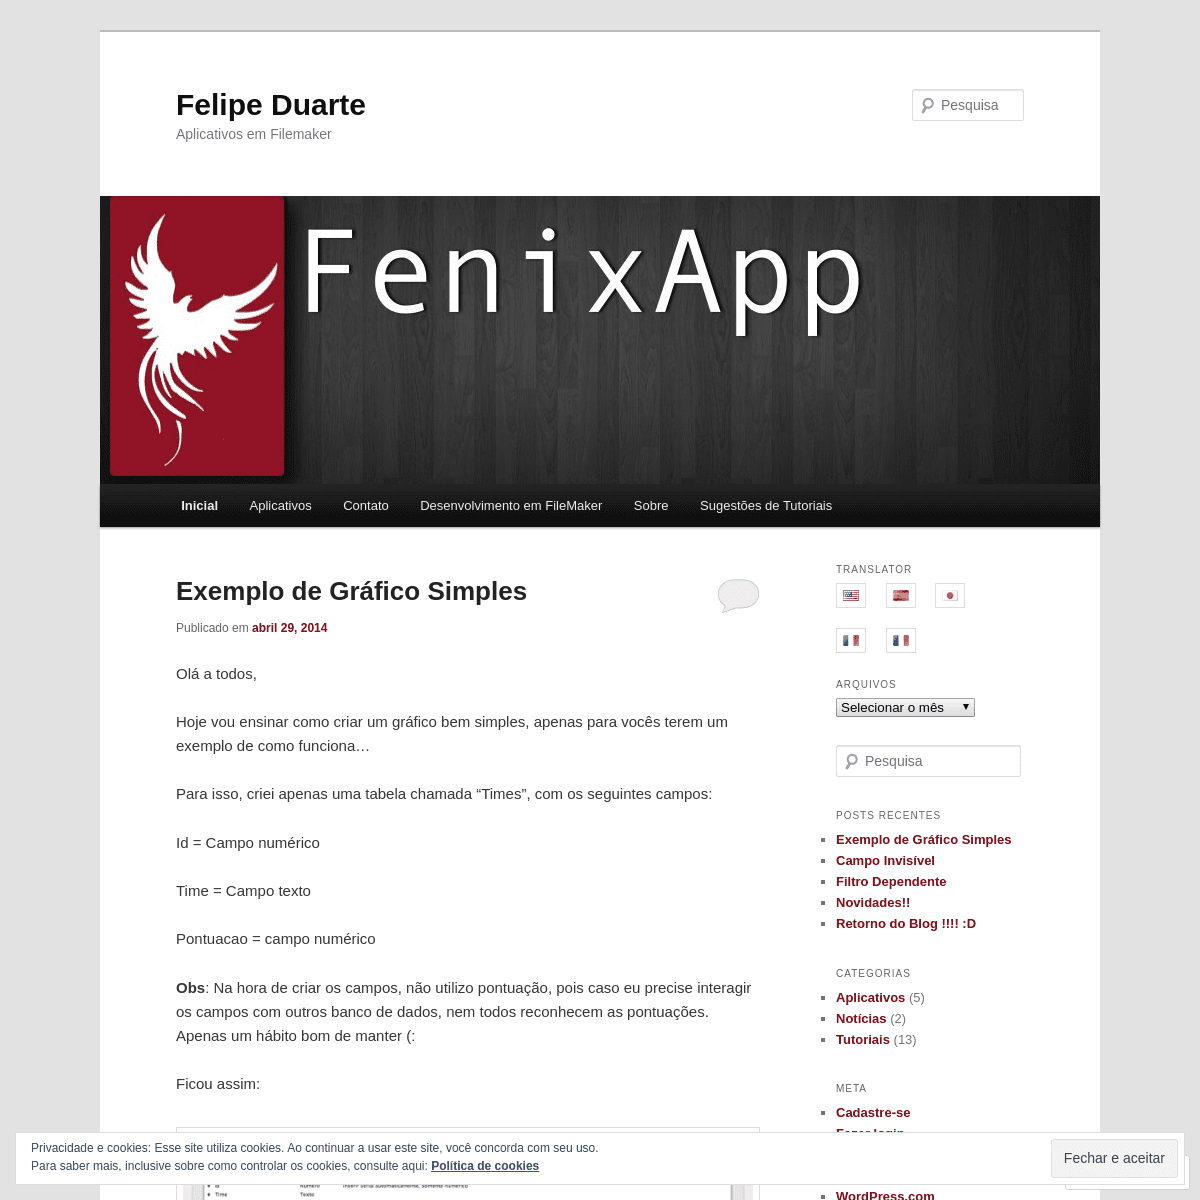 A complete backup of fenixapp.wordpress.com